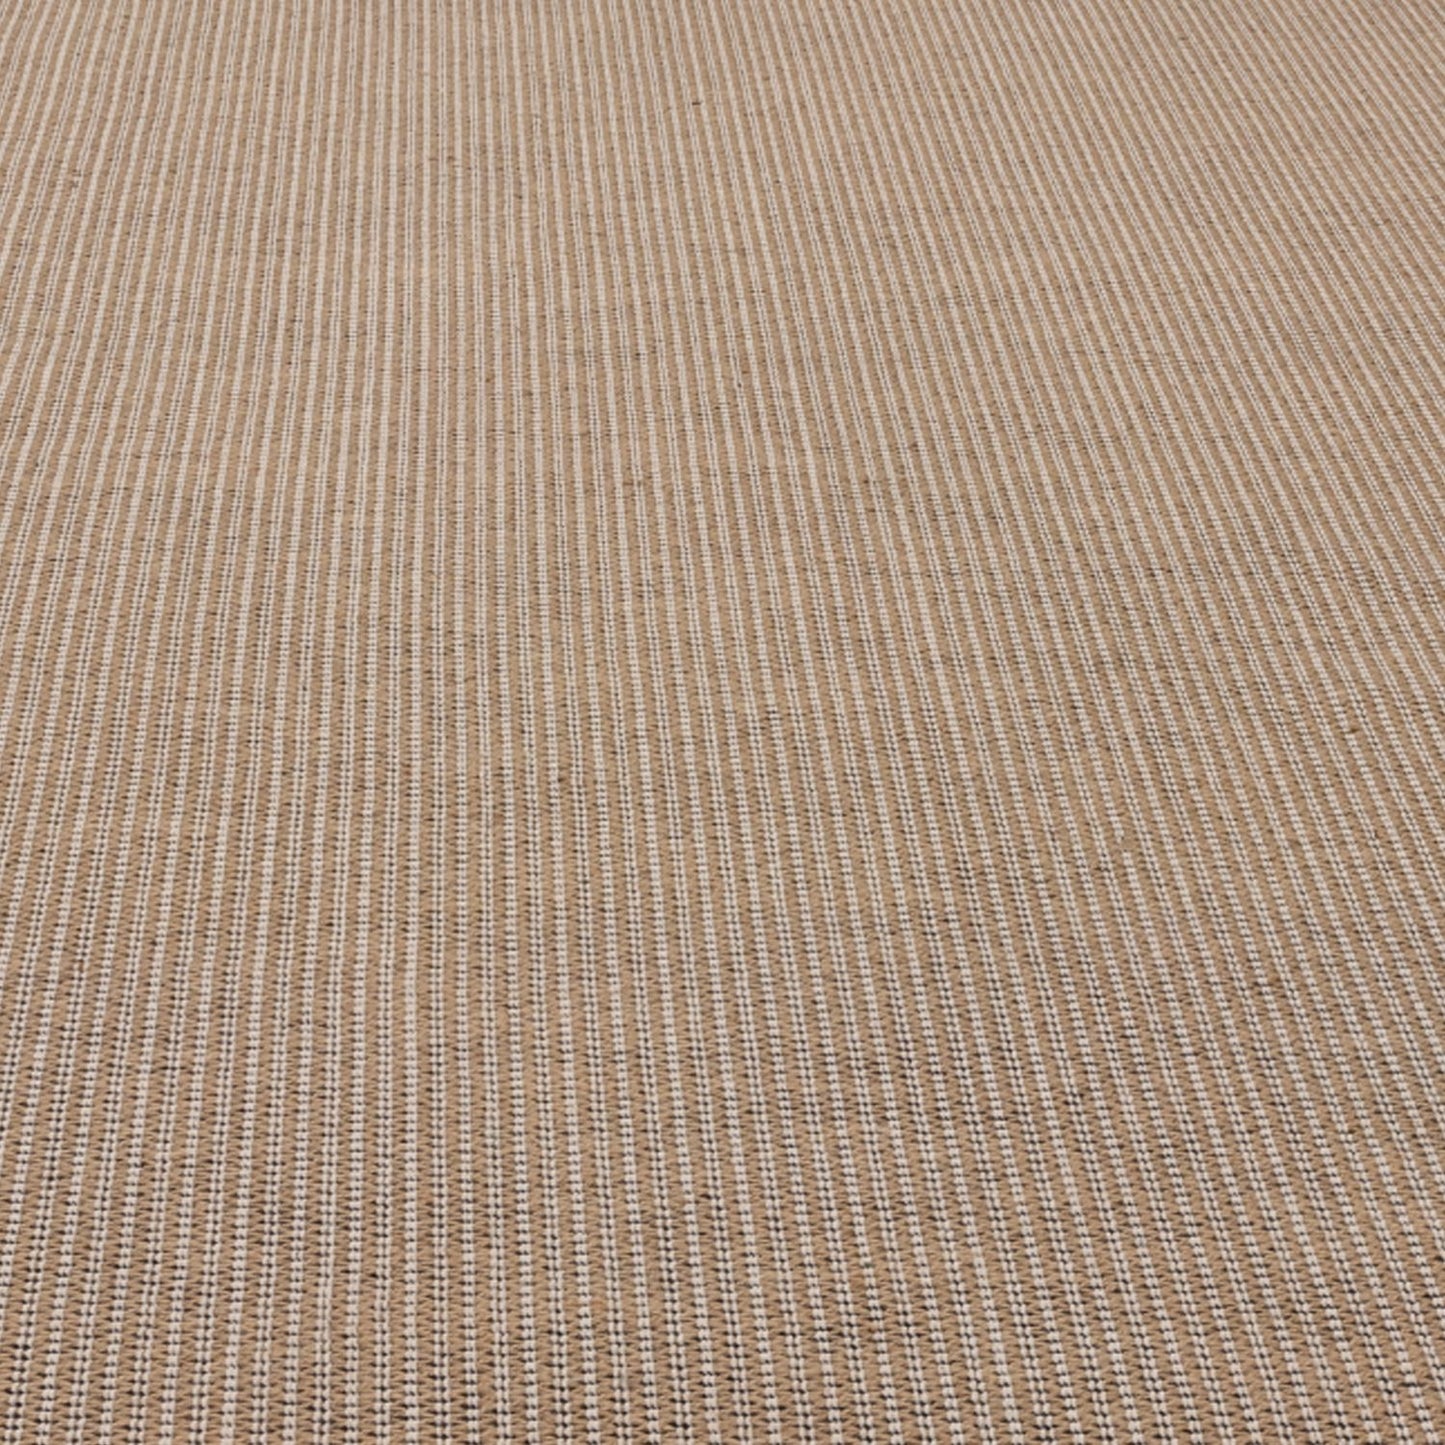 Organic Plain Floor Rug